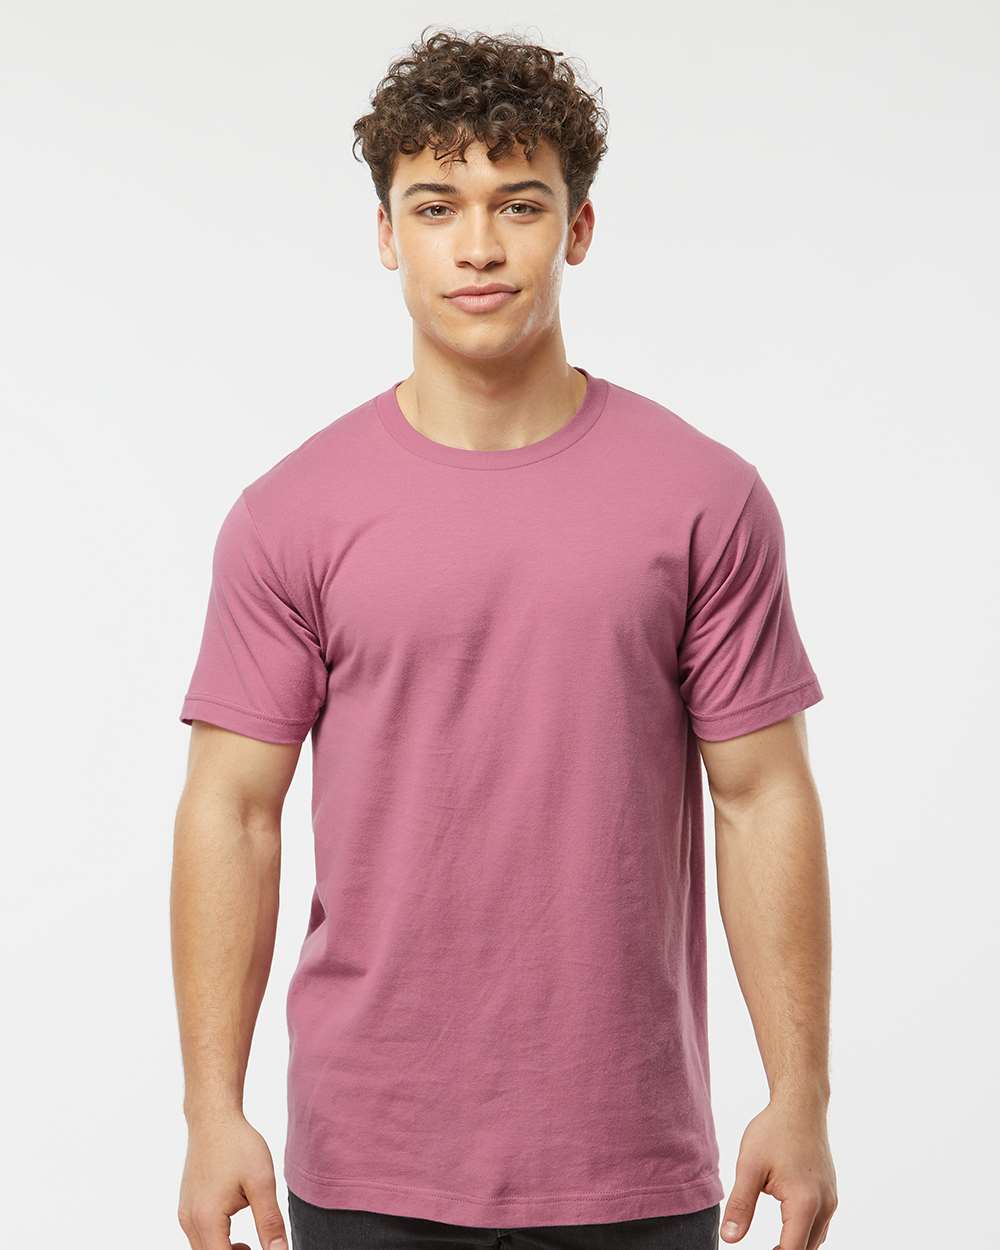 Tultex - Unisex Fine Jersey T-Shirt